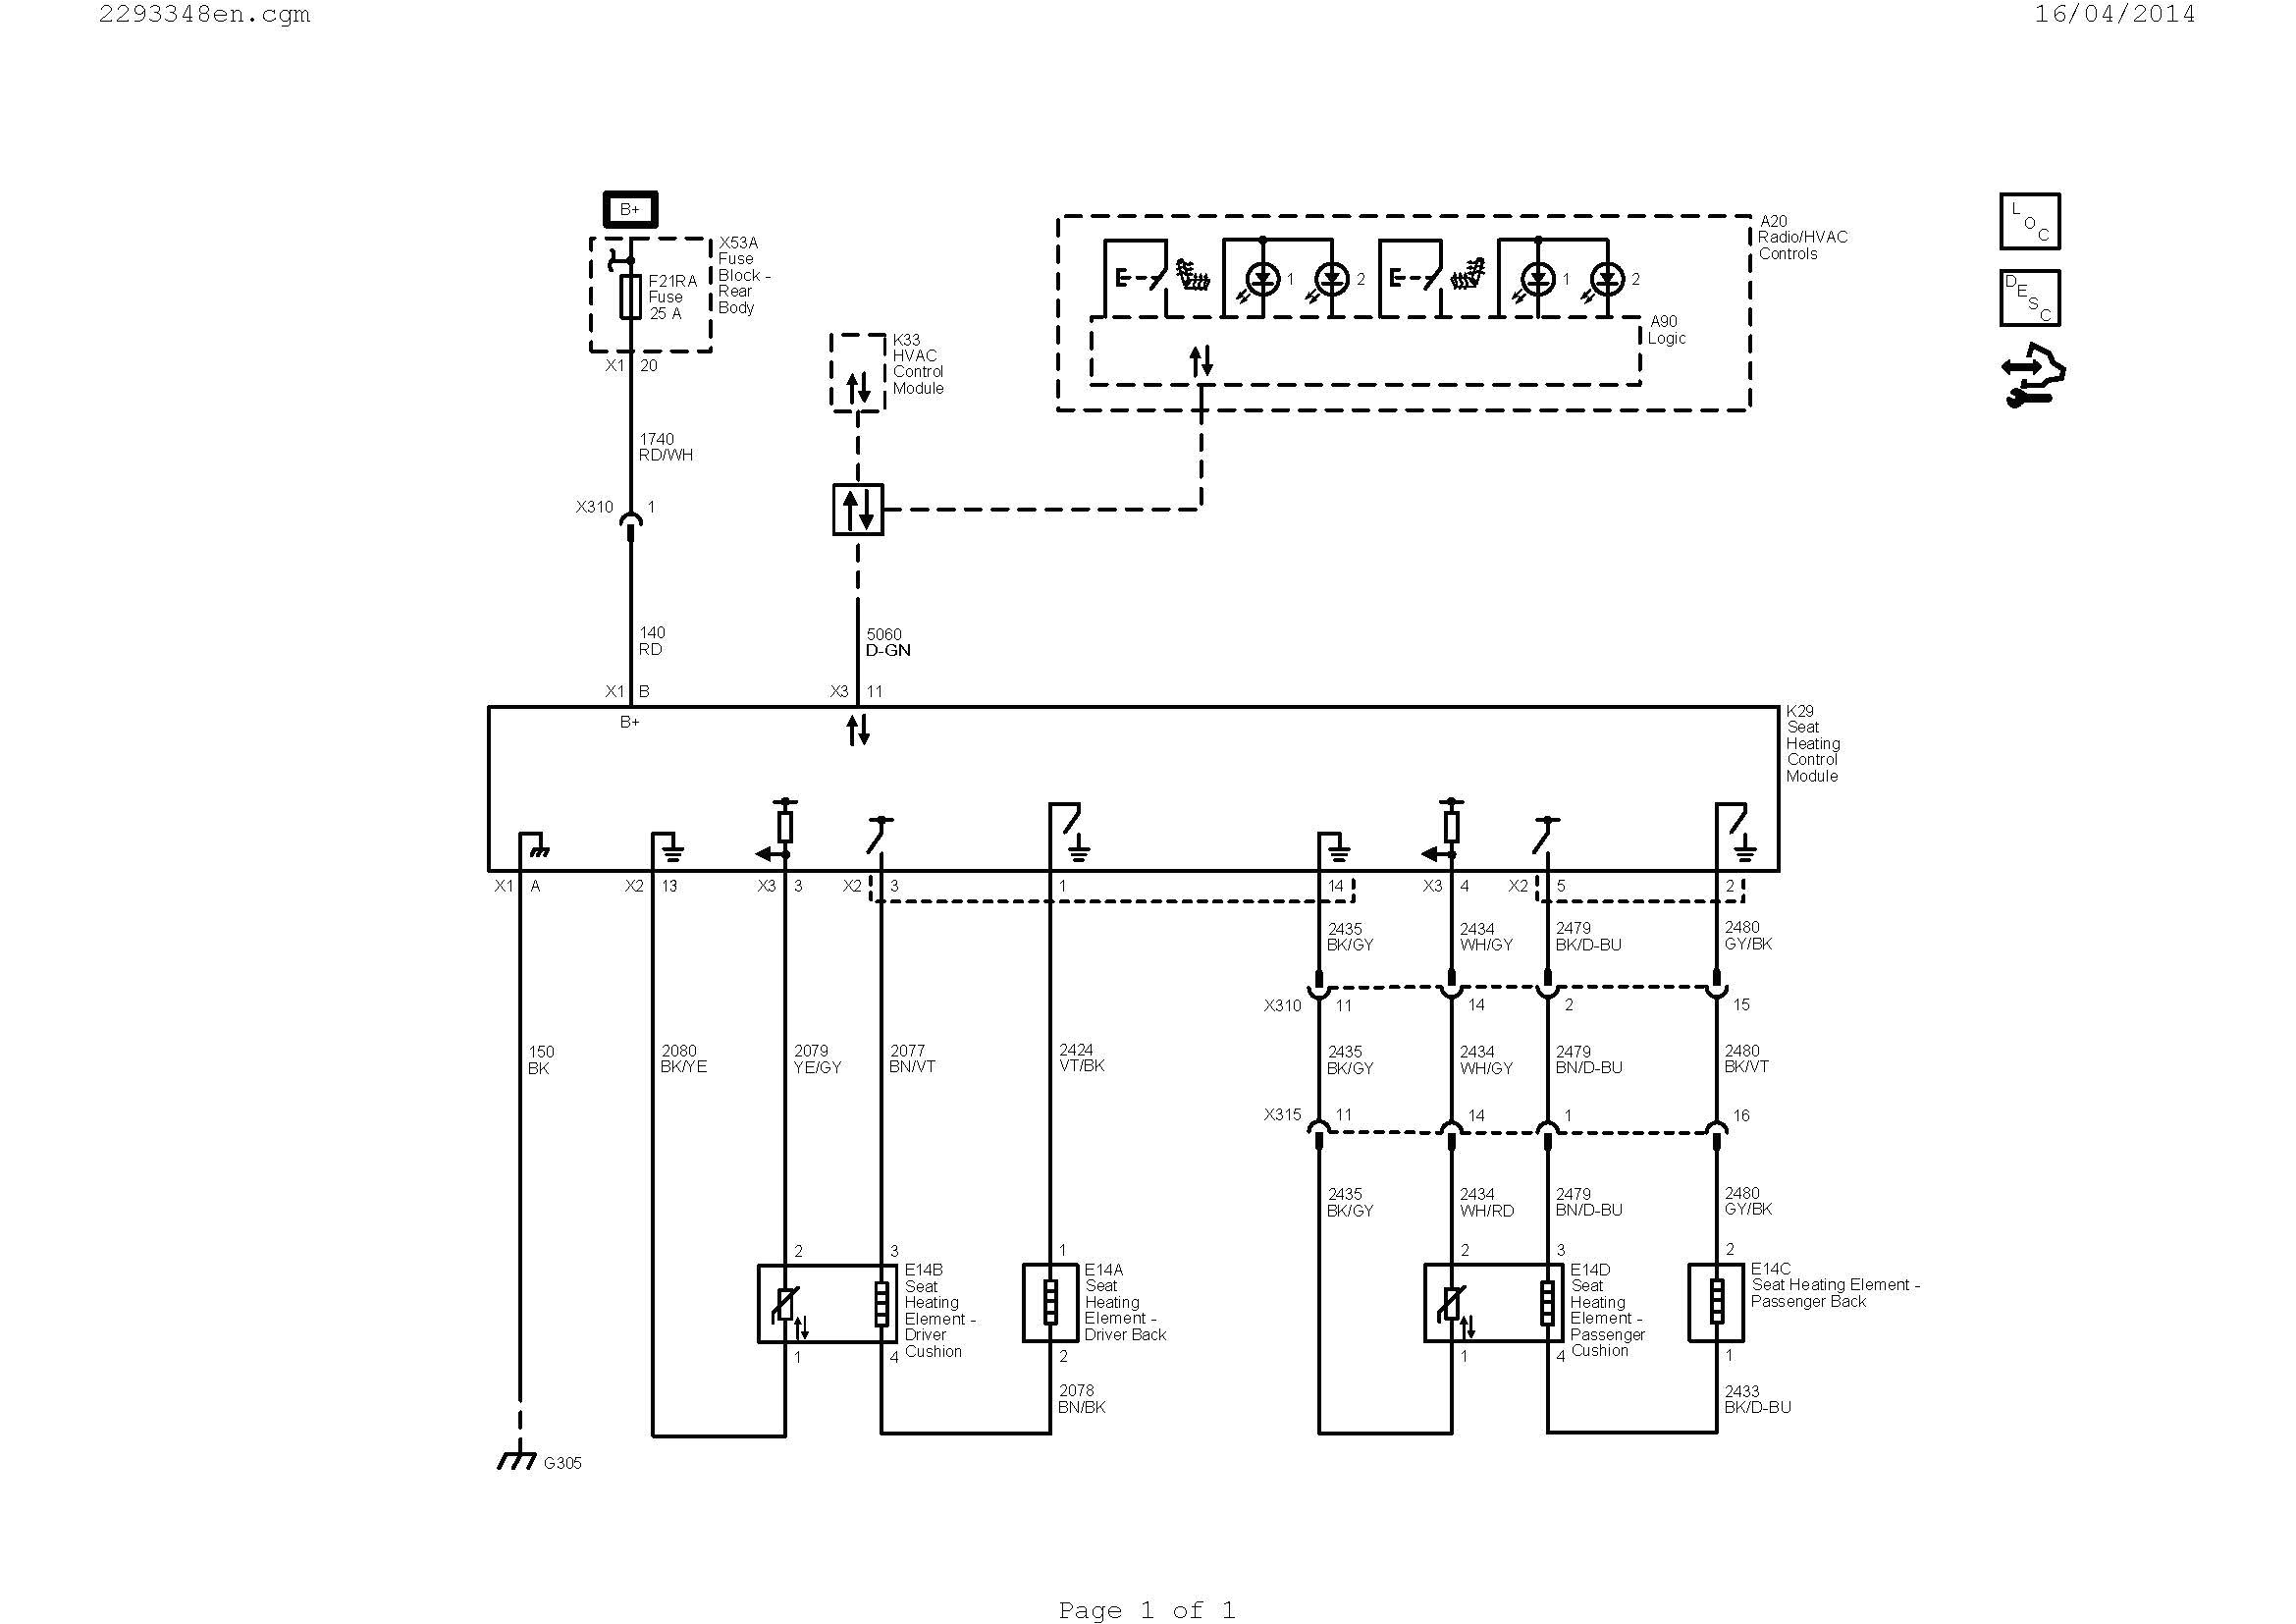 rule 800 bilge pump wiring diagram fresh wiring diagram book collection